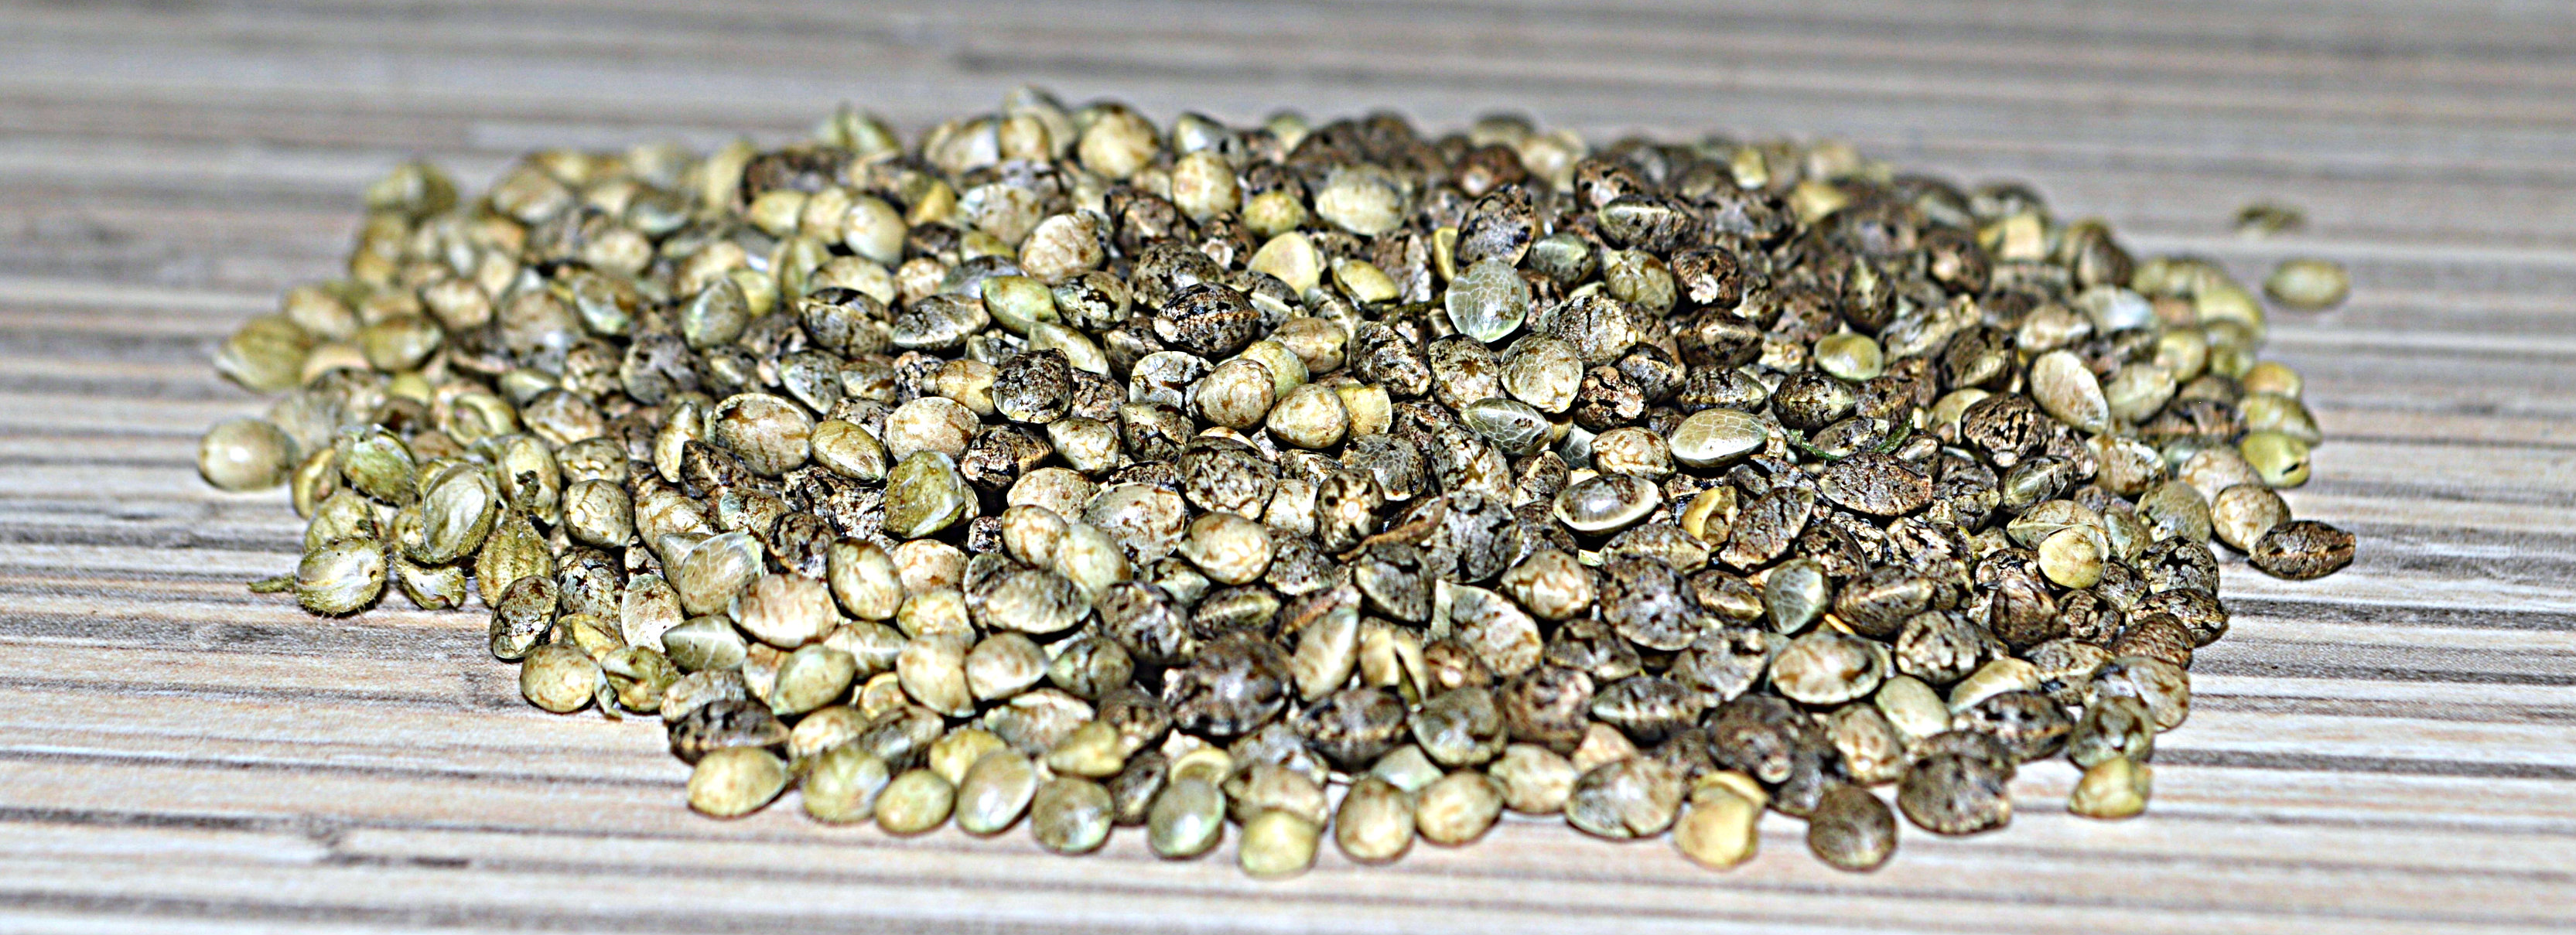 autoflowering seed pile